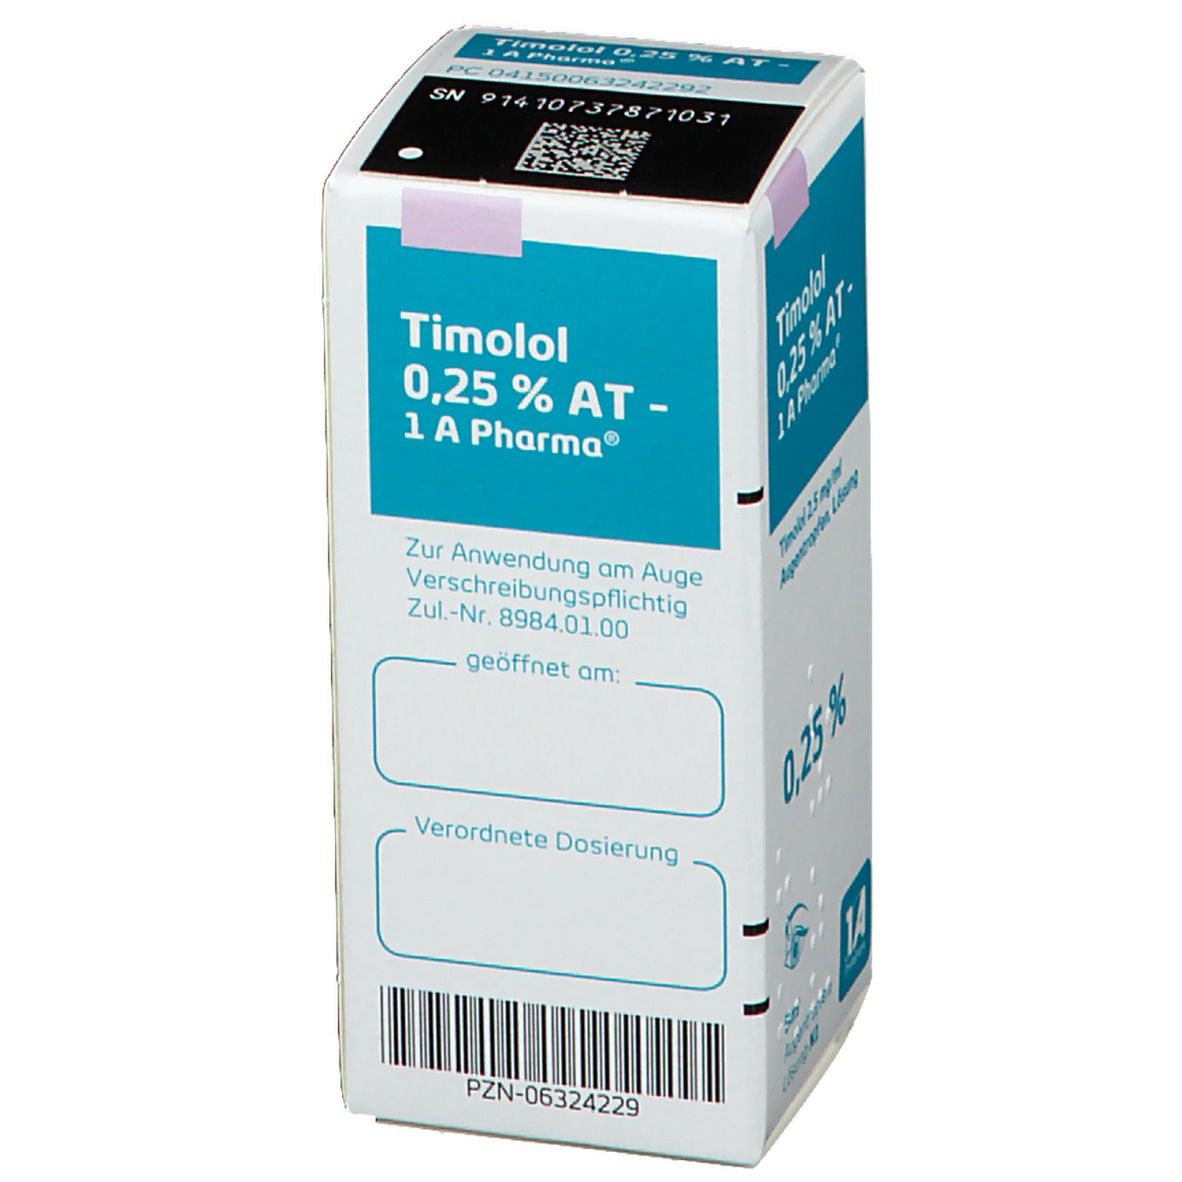 Timolol 0.25% At 1A Pharma®